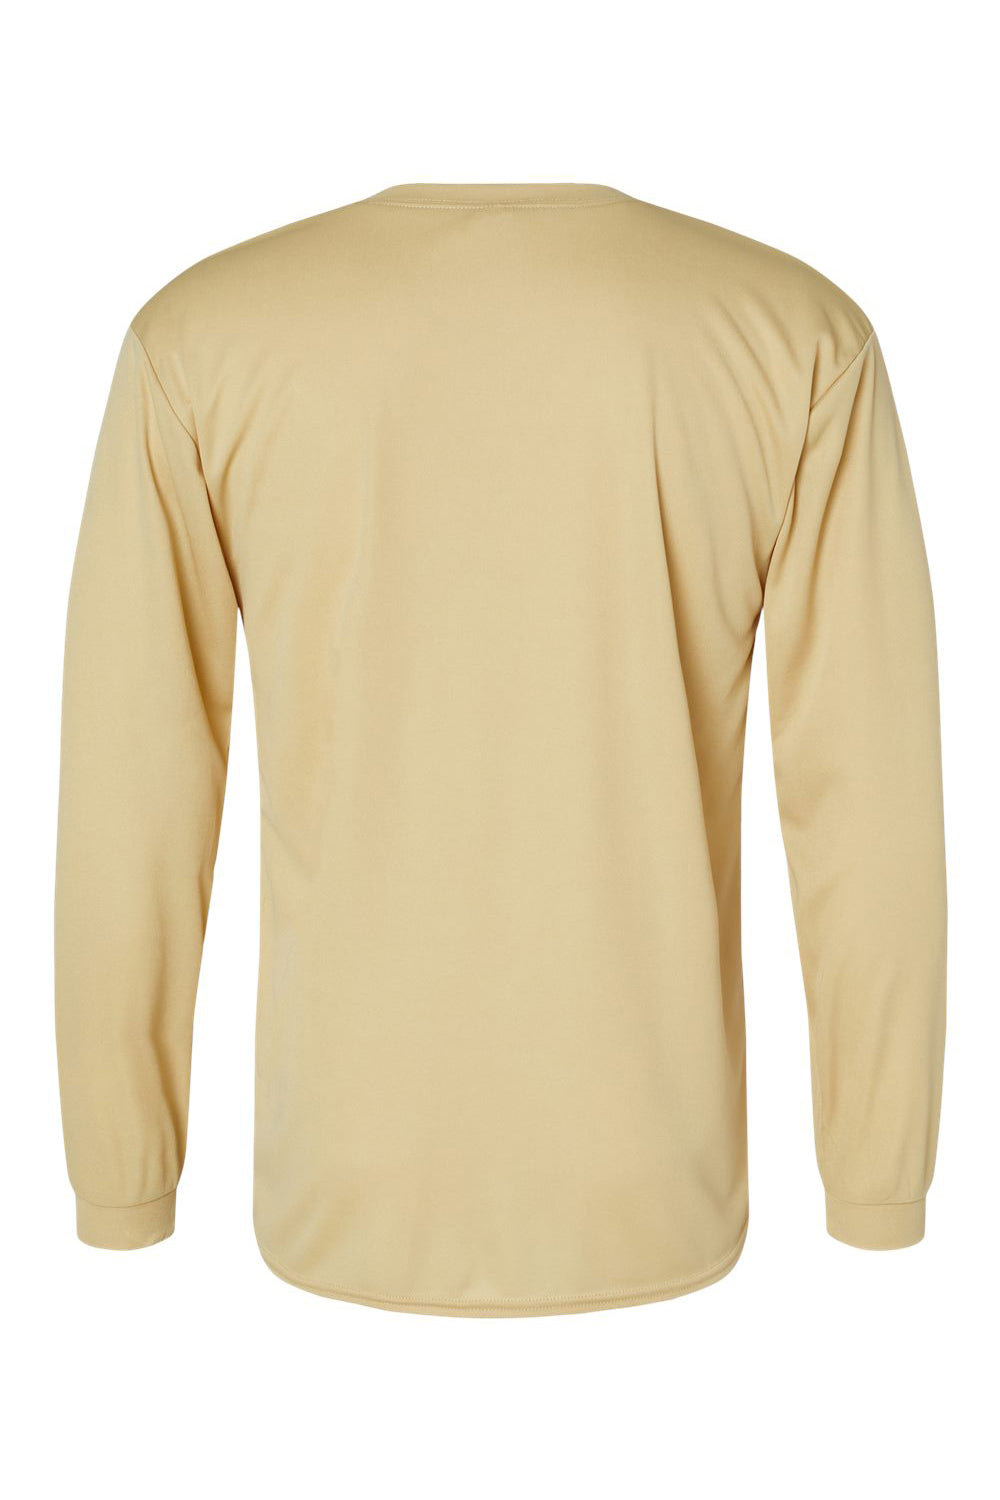 C2 Sport 5104 Mens Performance Moisture Wicking Long Sleeve Crewneck T-Shirt Vegas Gold Flat Back